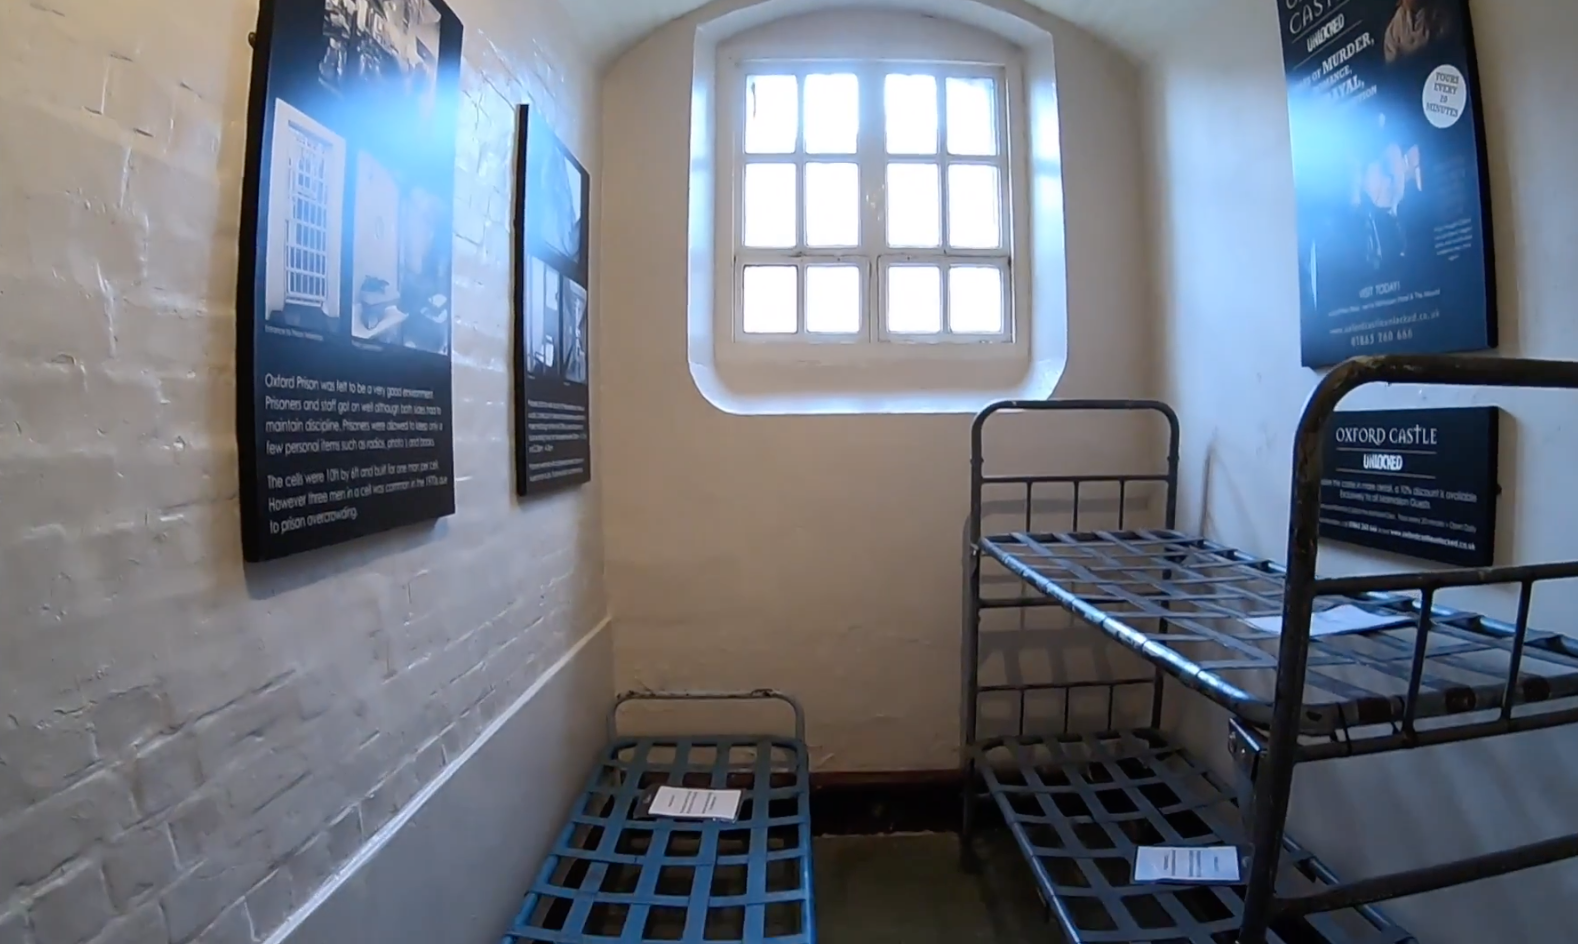 Prison-turned-hotel sparks debate on social media